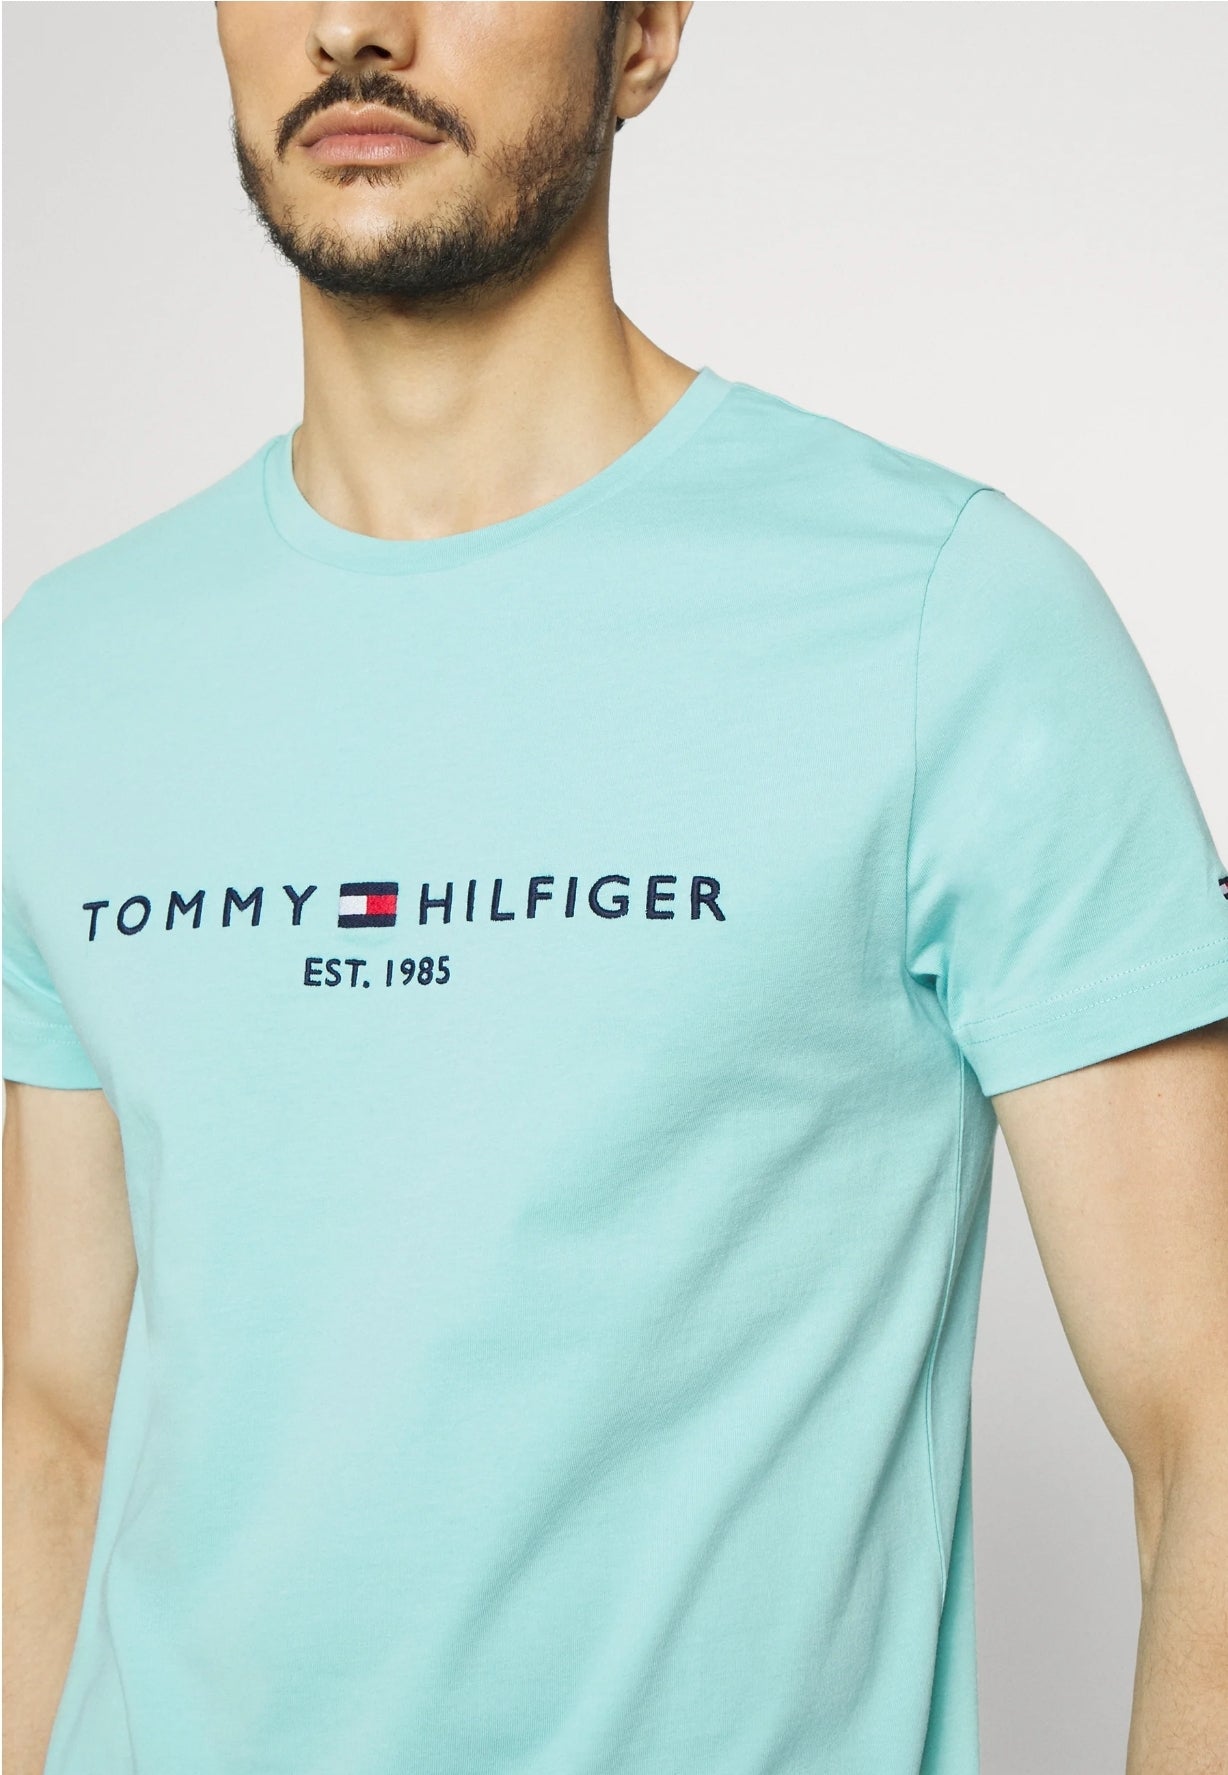 T-SHIRT TOMMY HILFIGER 1985